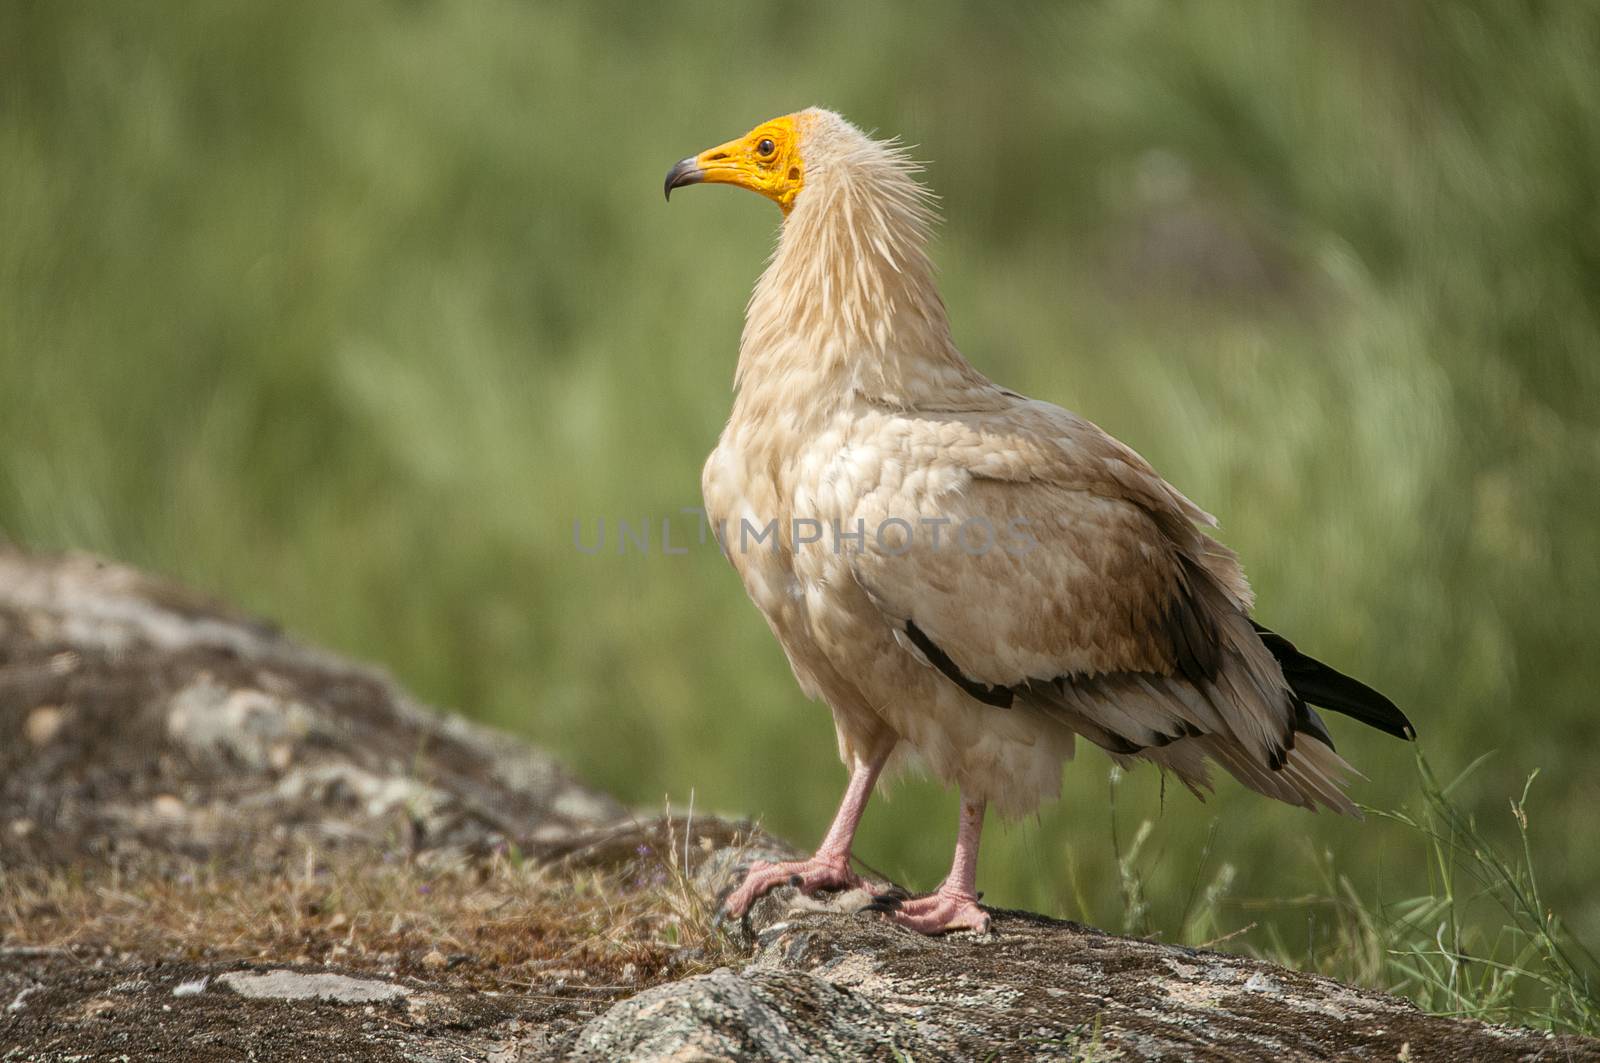 Egyptian Vulture (Neophron percnopterus), spain, portrait perche by jalonsohu@gmail.com